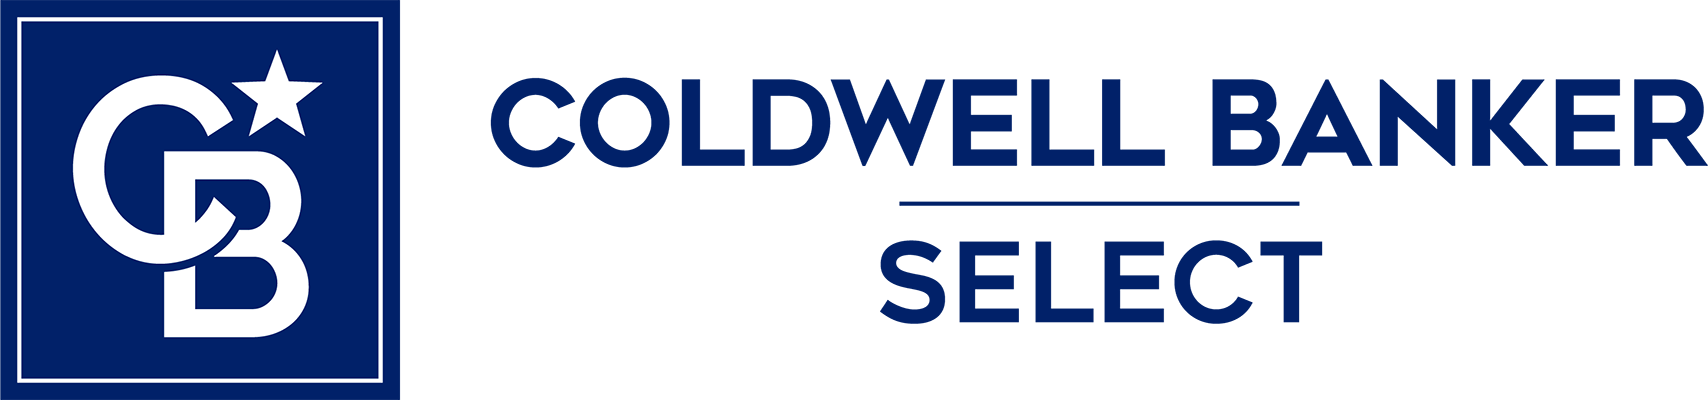 Christian Urquiza - Coldwell Banker Select Logo